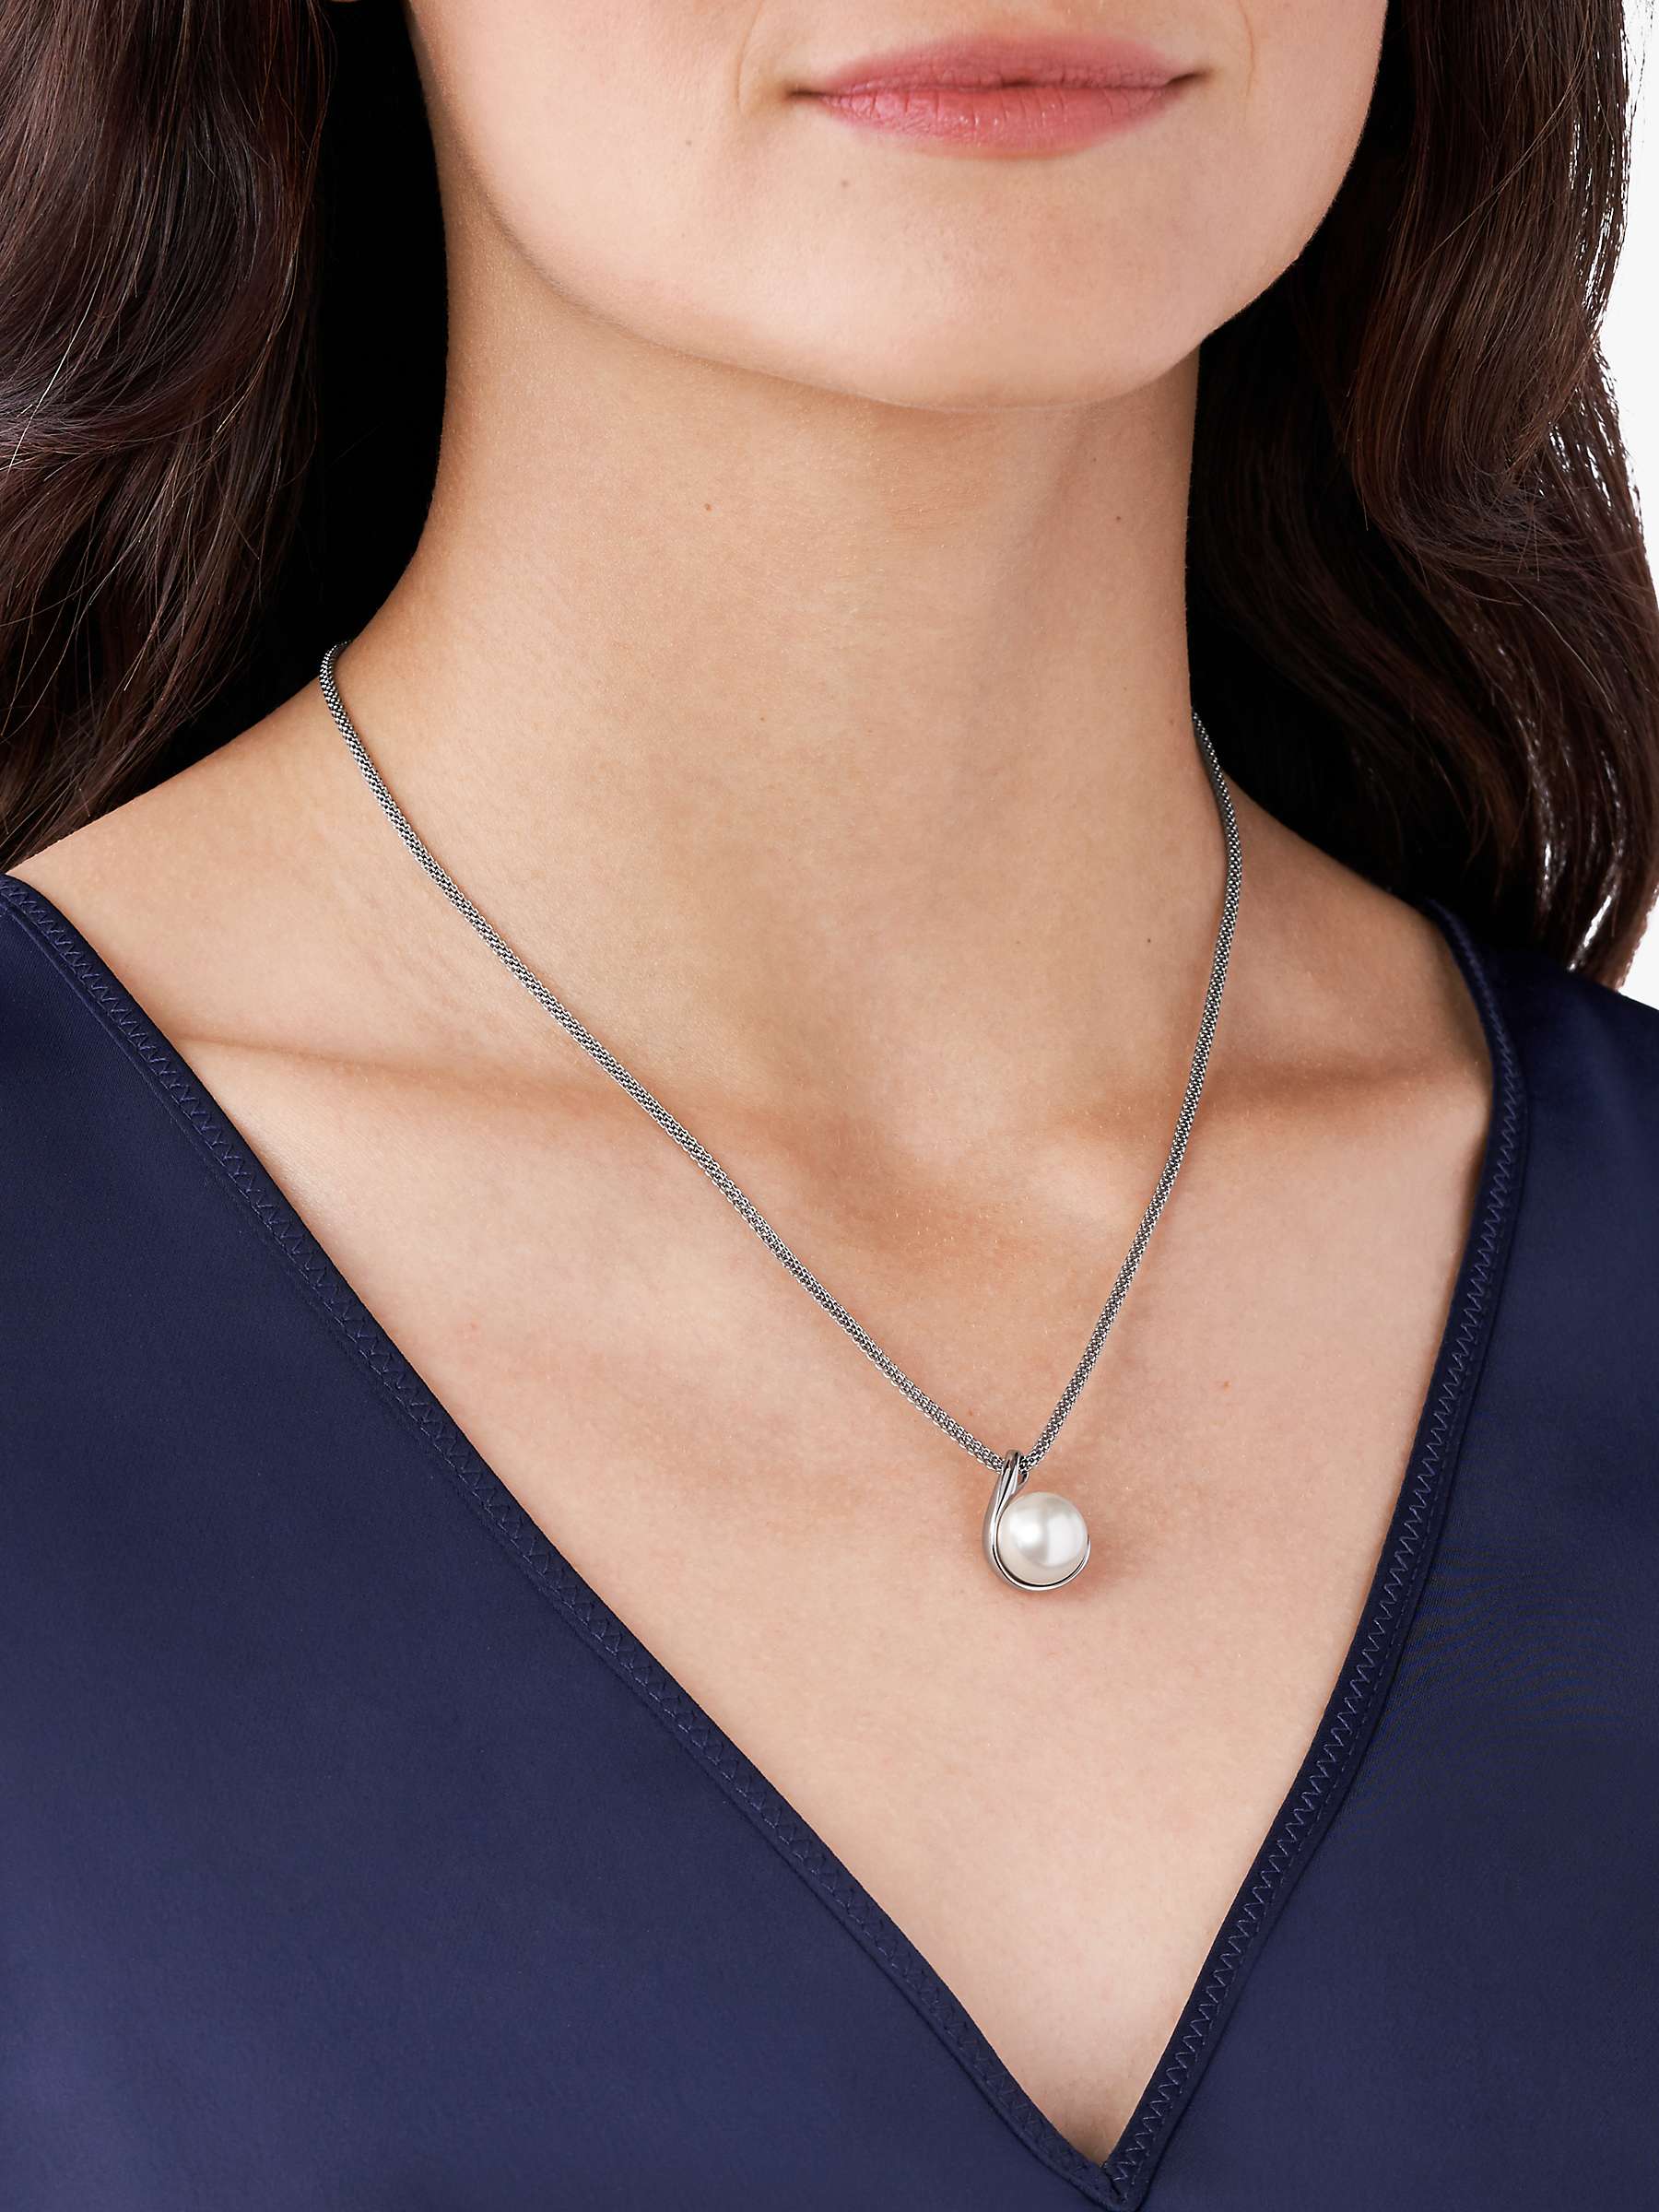 Buy Skagen Agnethe Pearl Crystal Pendant Necklace, Silver Online at johnlewis.com